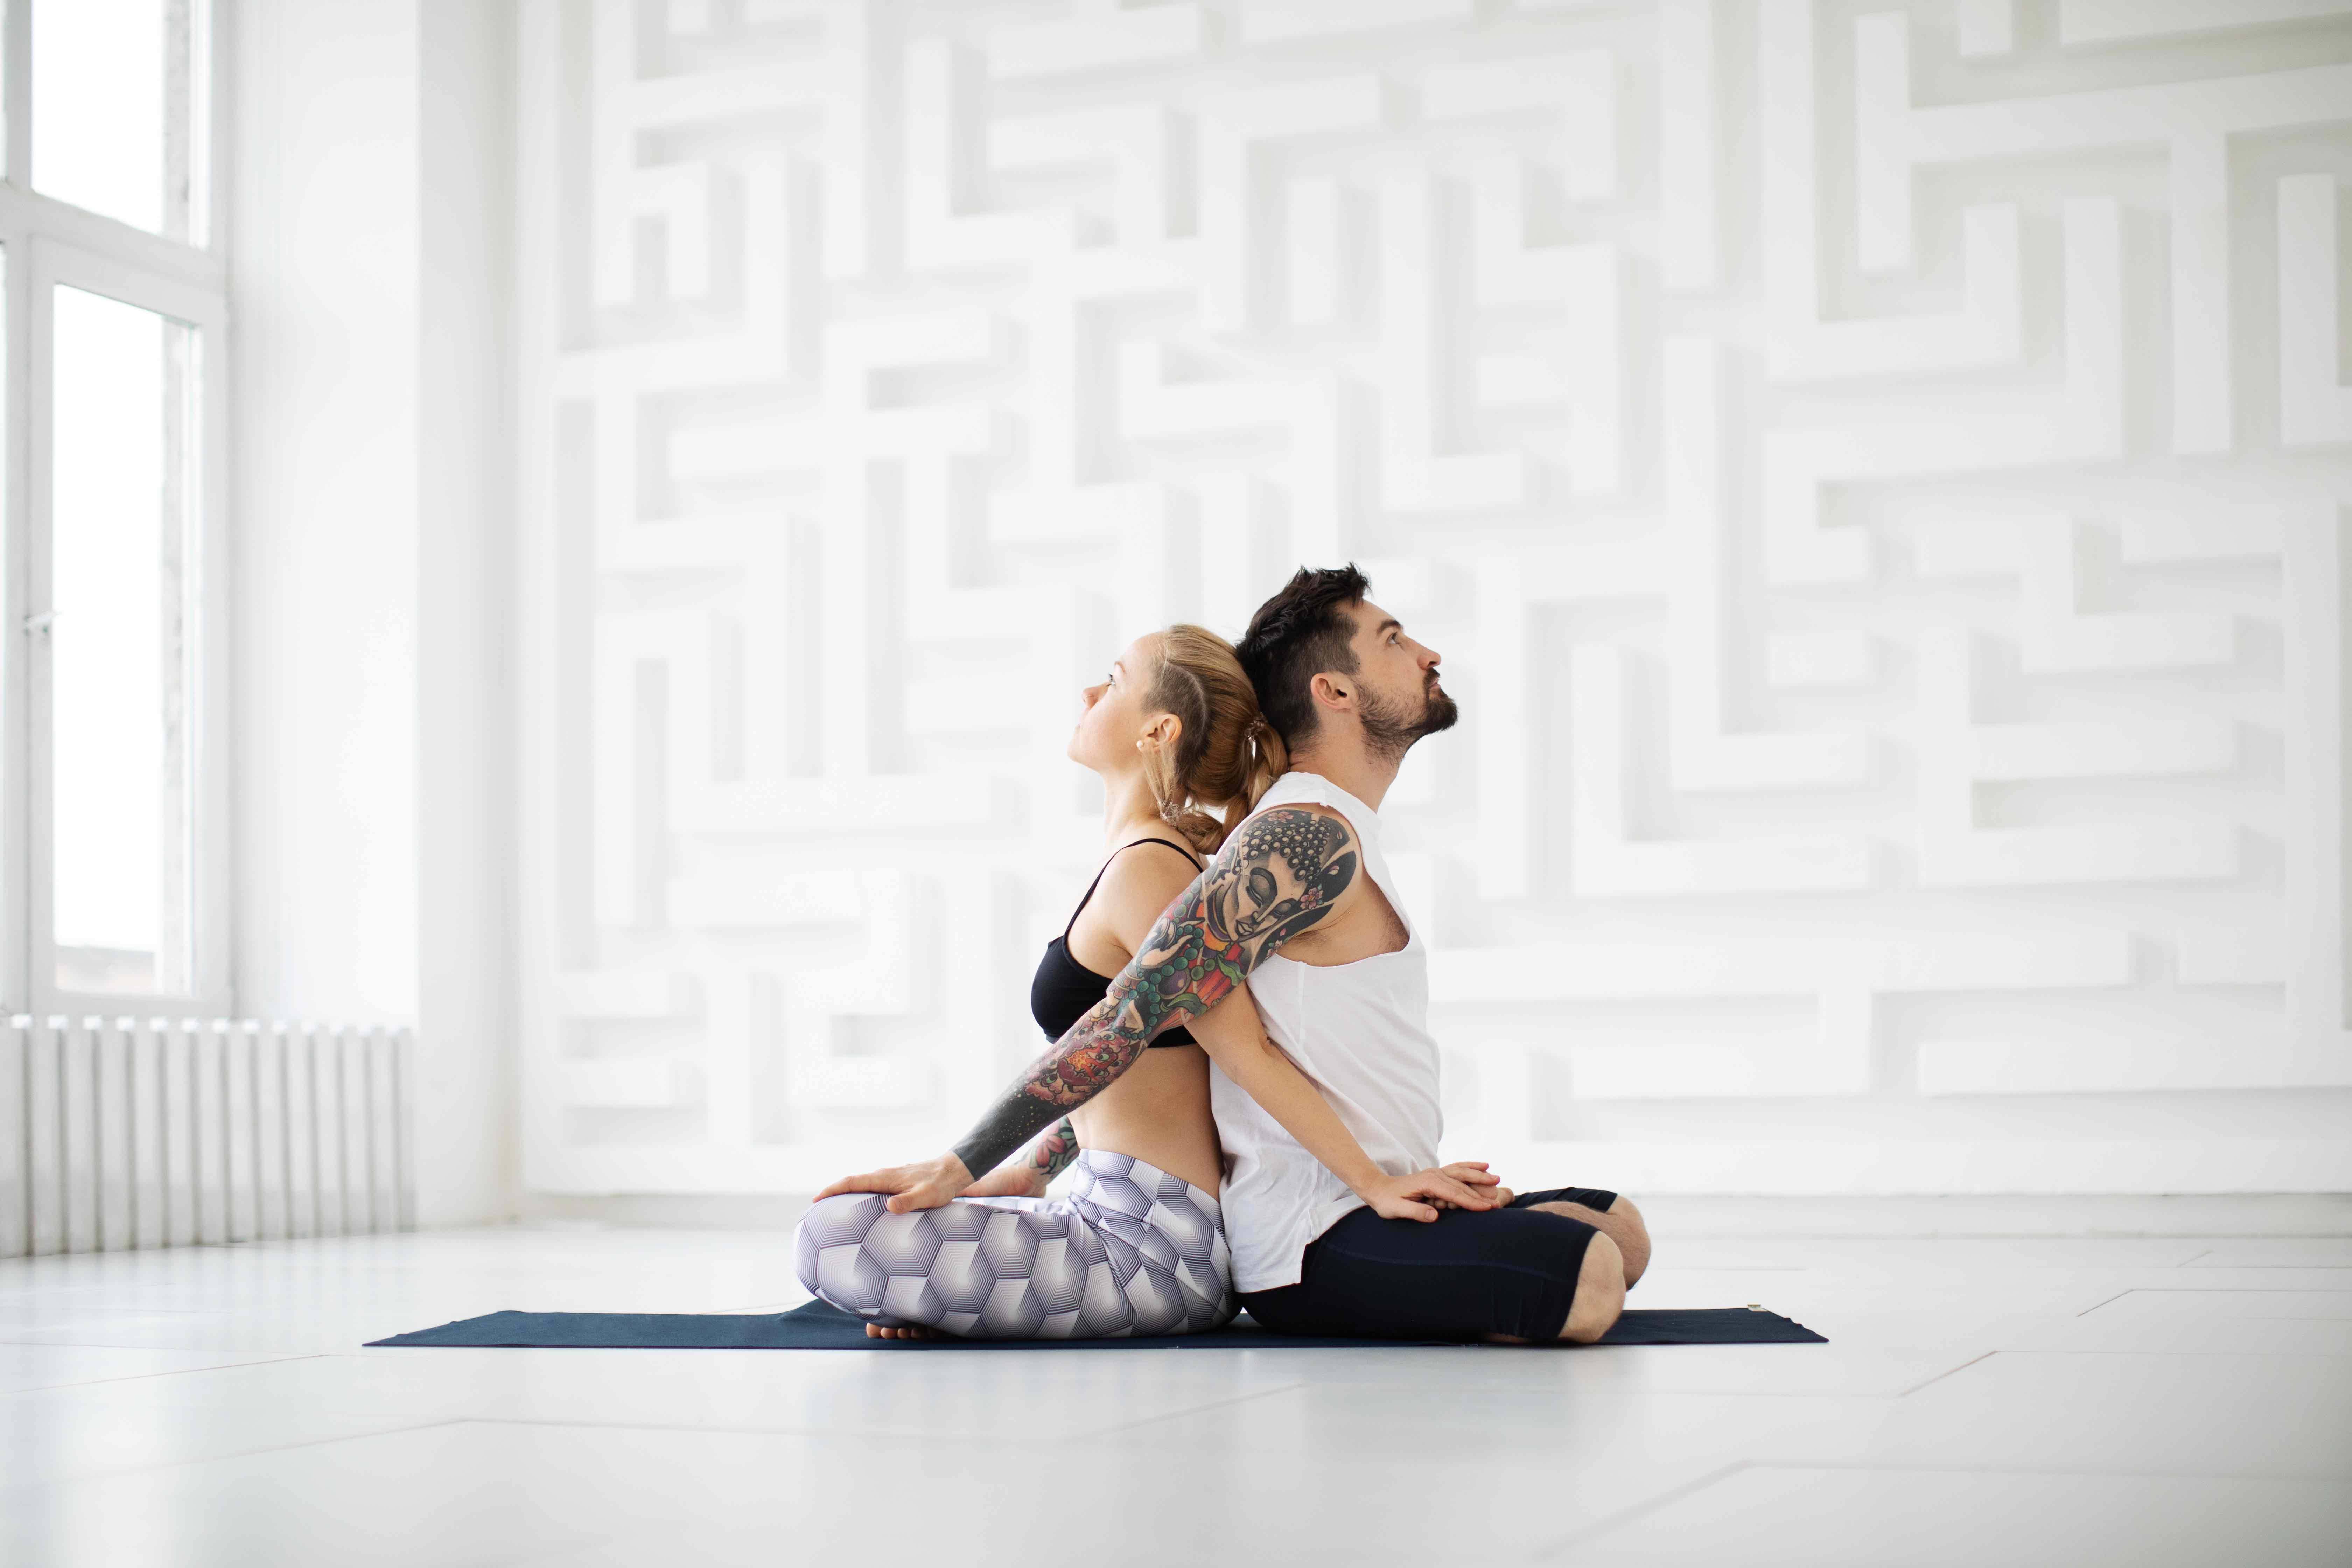 https://www.phillymag.com/wp-content/uploads/sites/3/2019/02/partner-yoga.jpg